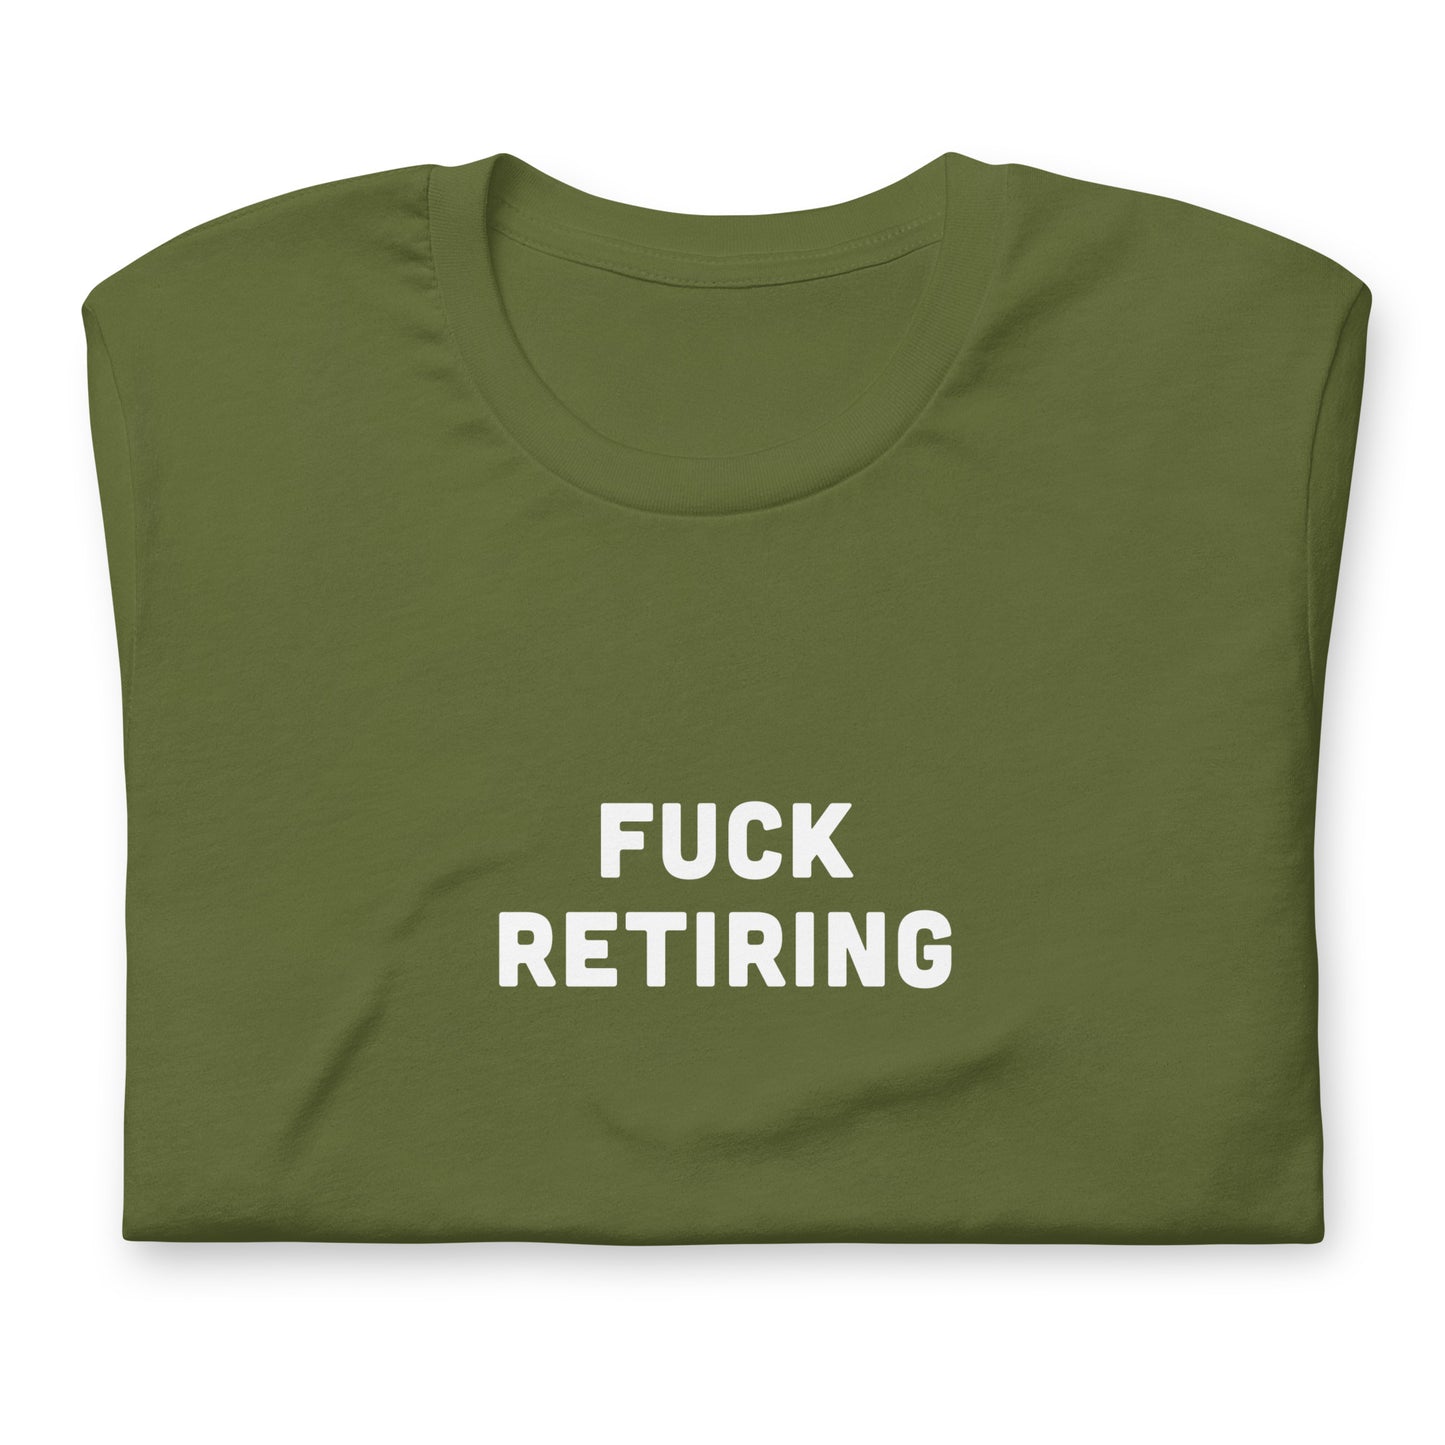 Fuck Retiring T-Shirt Size M Color Navy